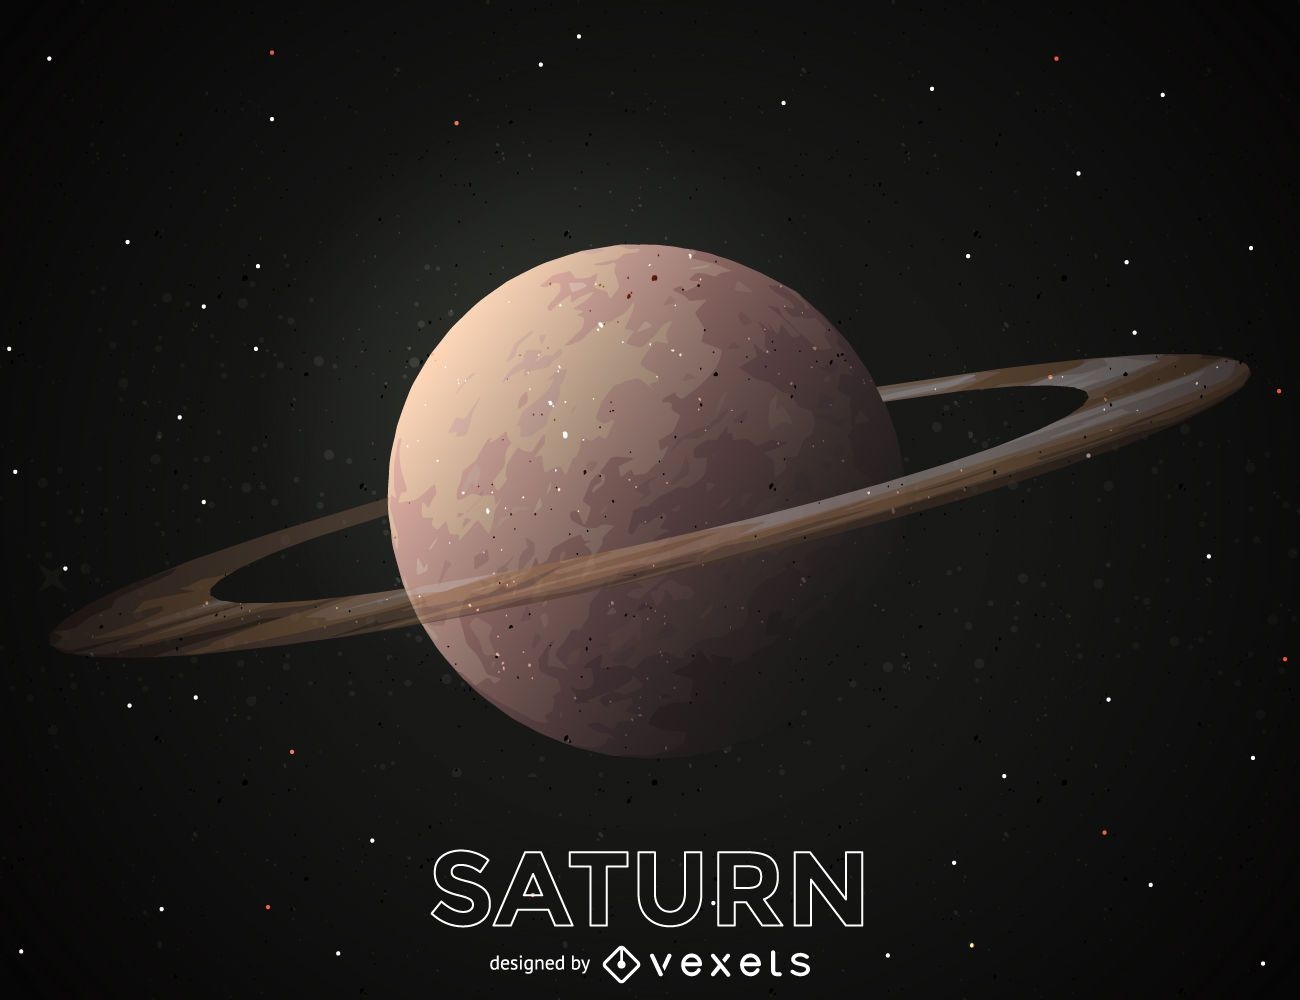 Ilustra??o do planeta Saturno